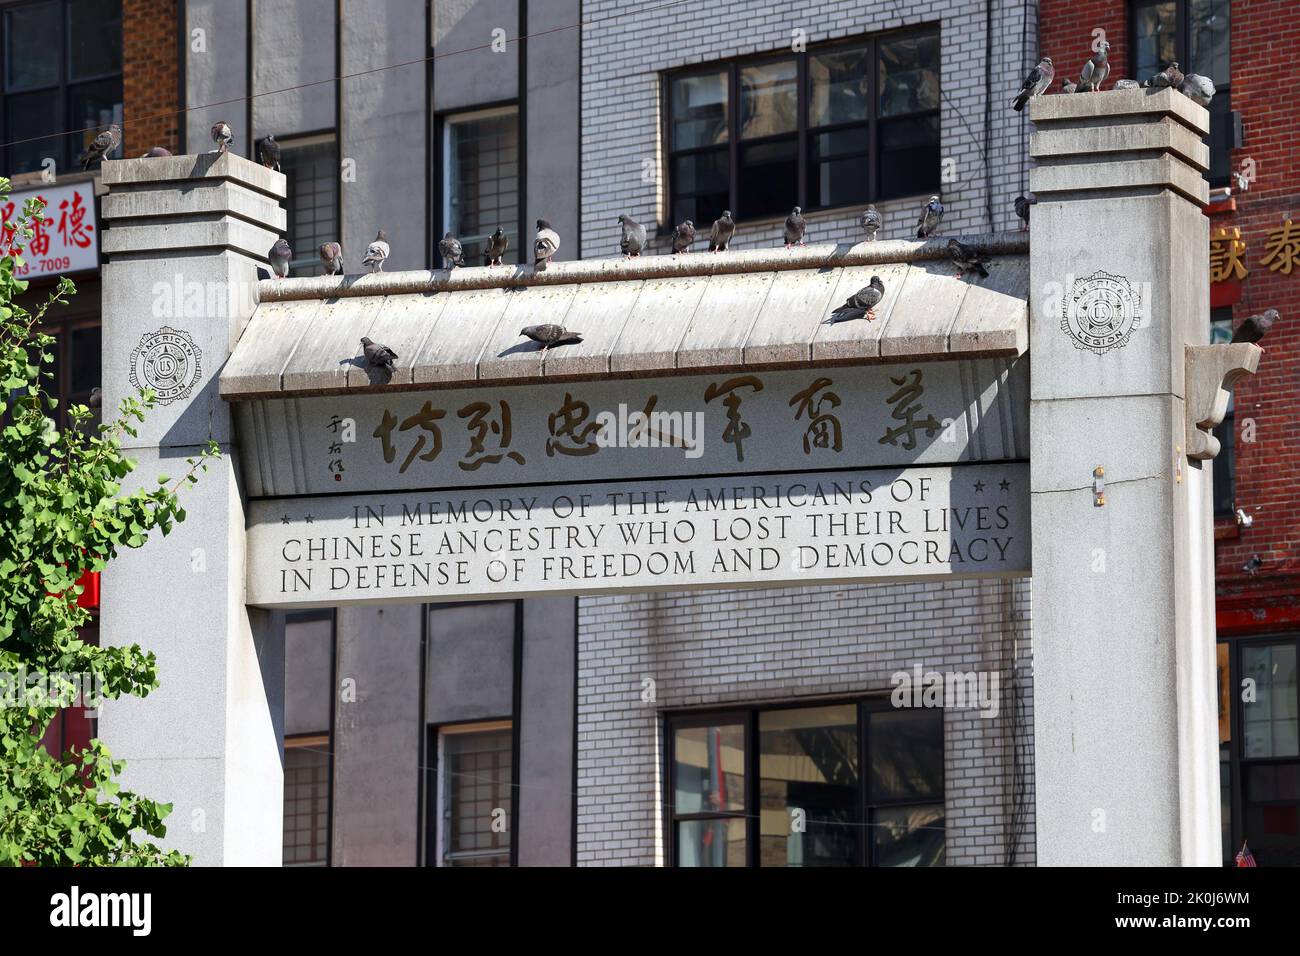 Kimlau Memorial Arch honoring Chinese American veterans at Kimlau Square/Chatham Sq in Manhattan Chinatown, New York. Stock Photo